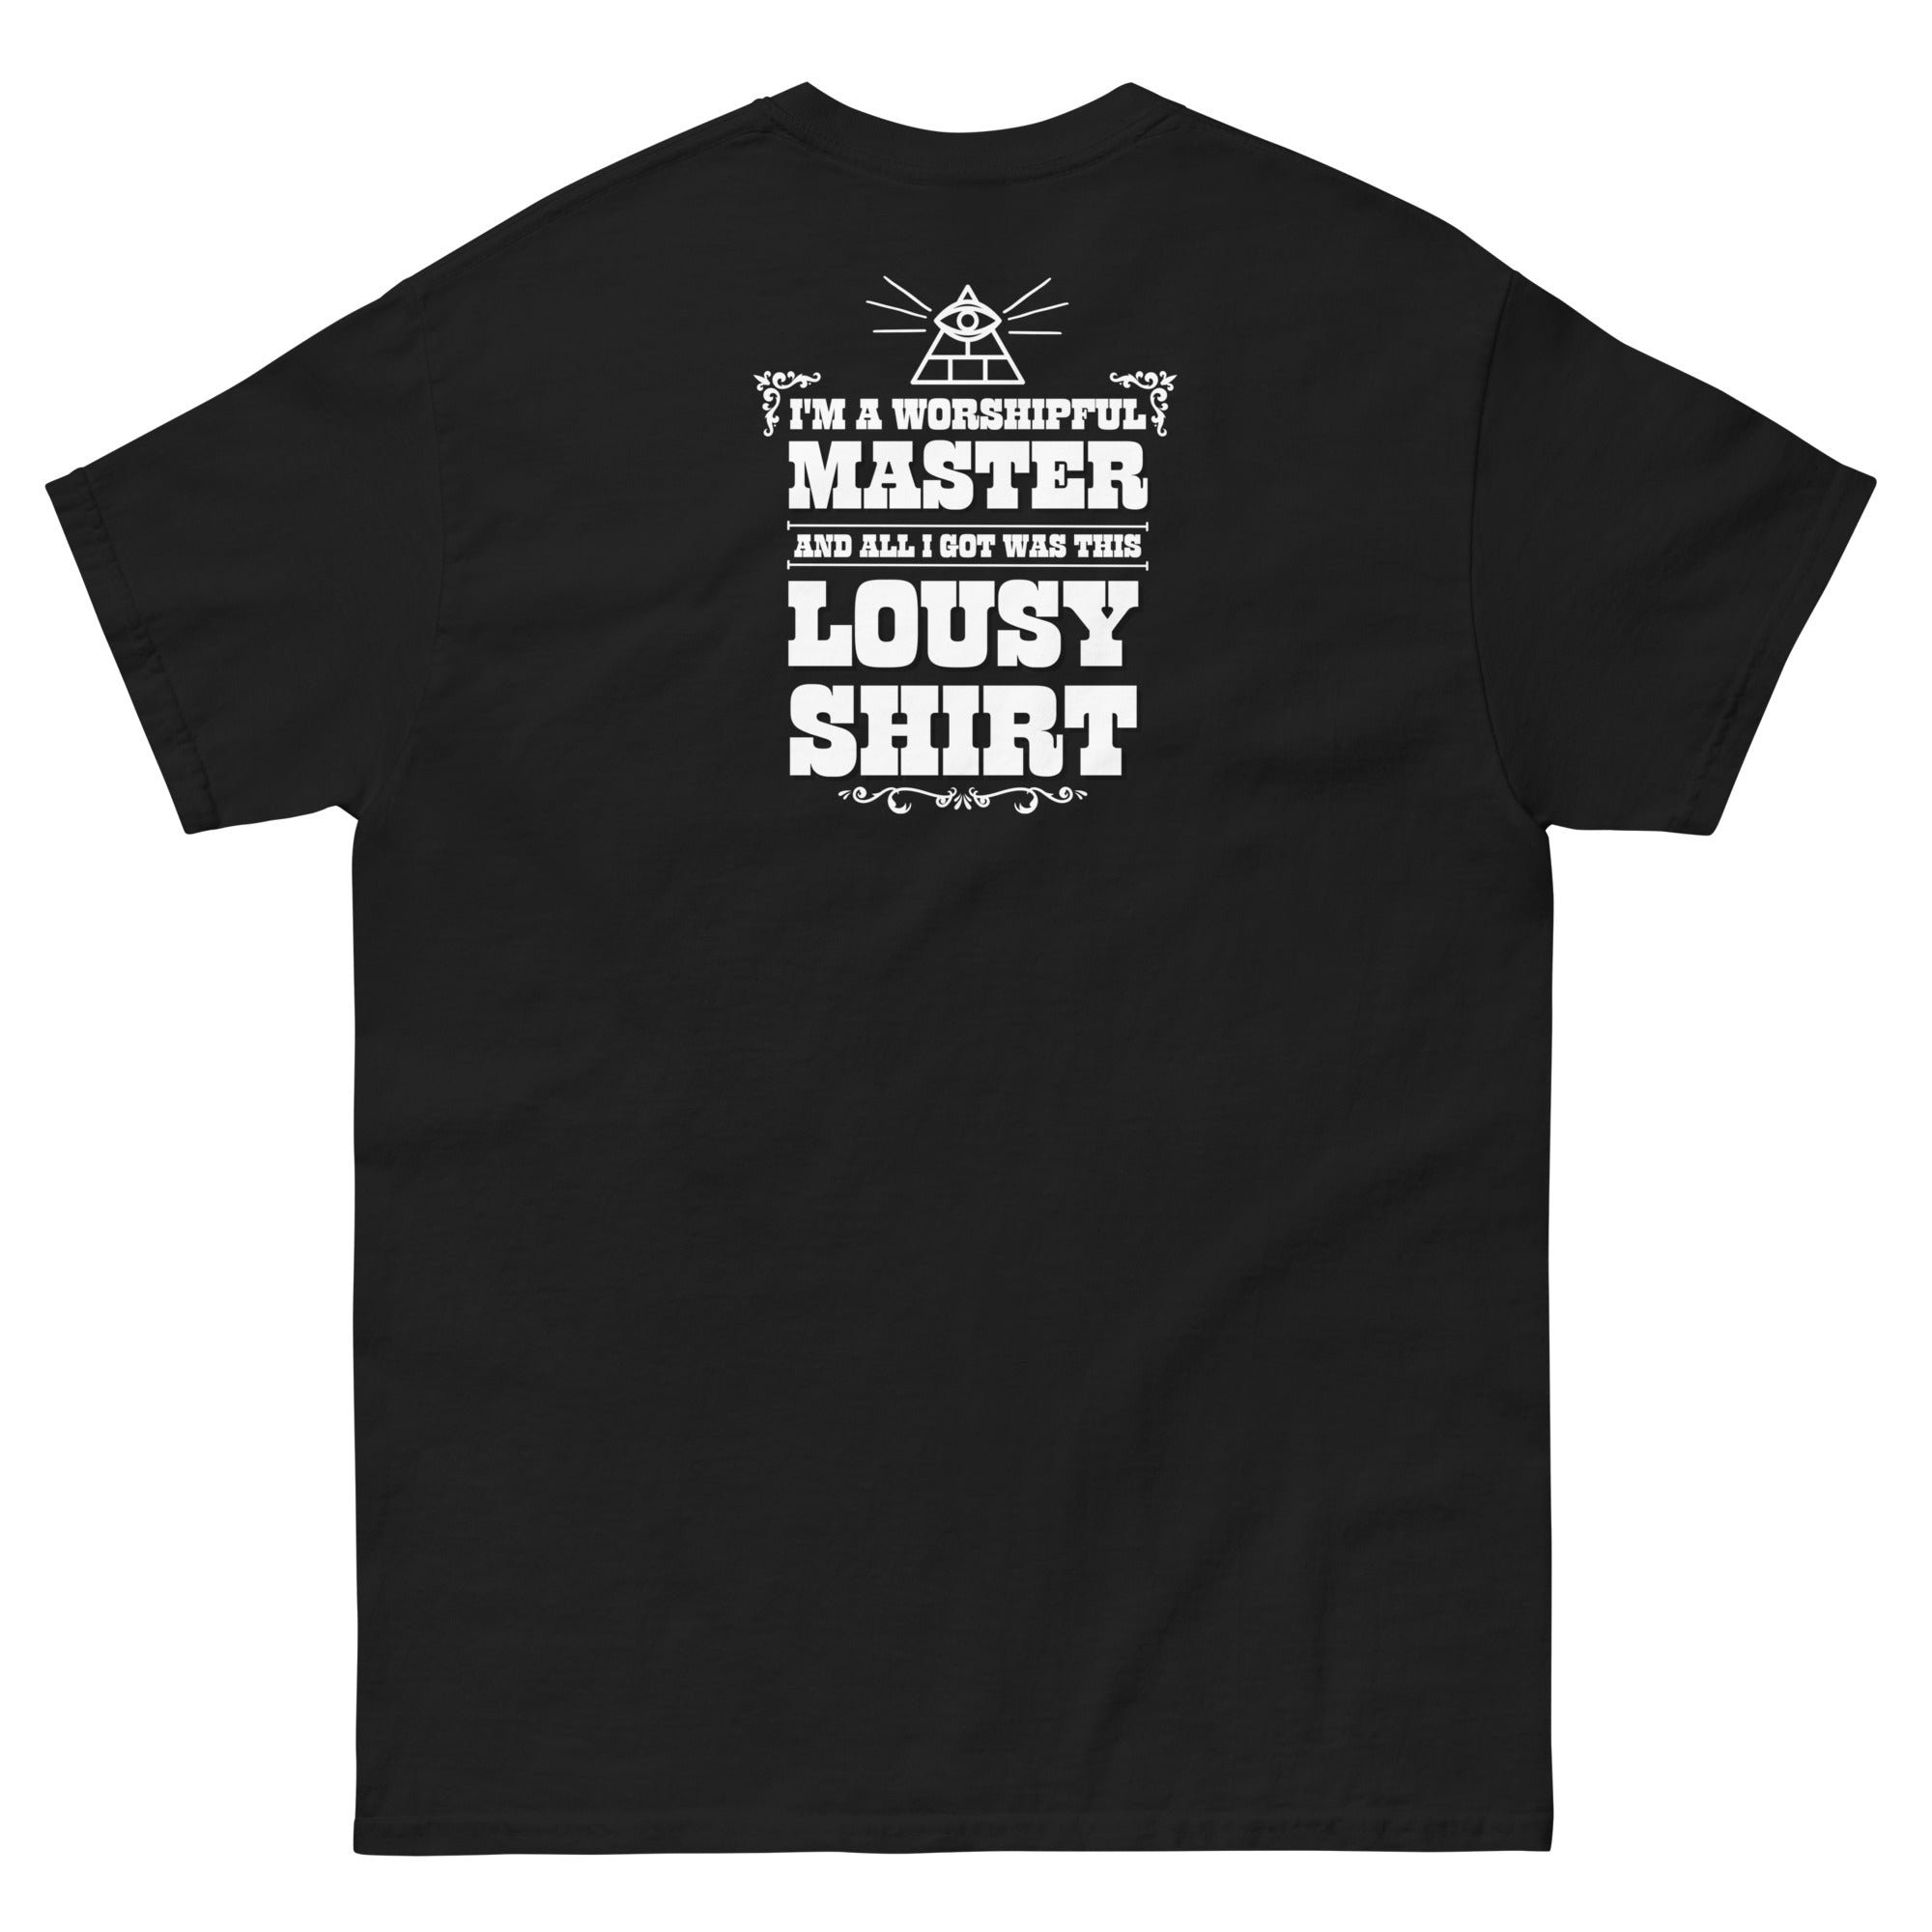 I'm a Worshipful Master t-shirt